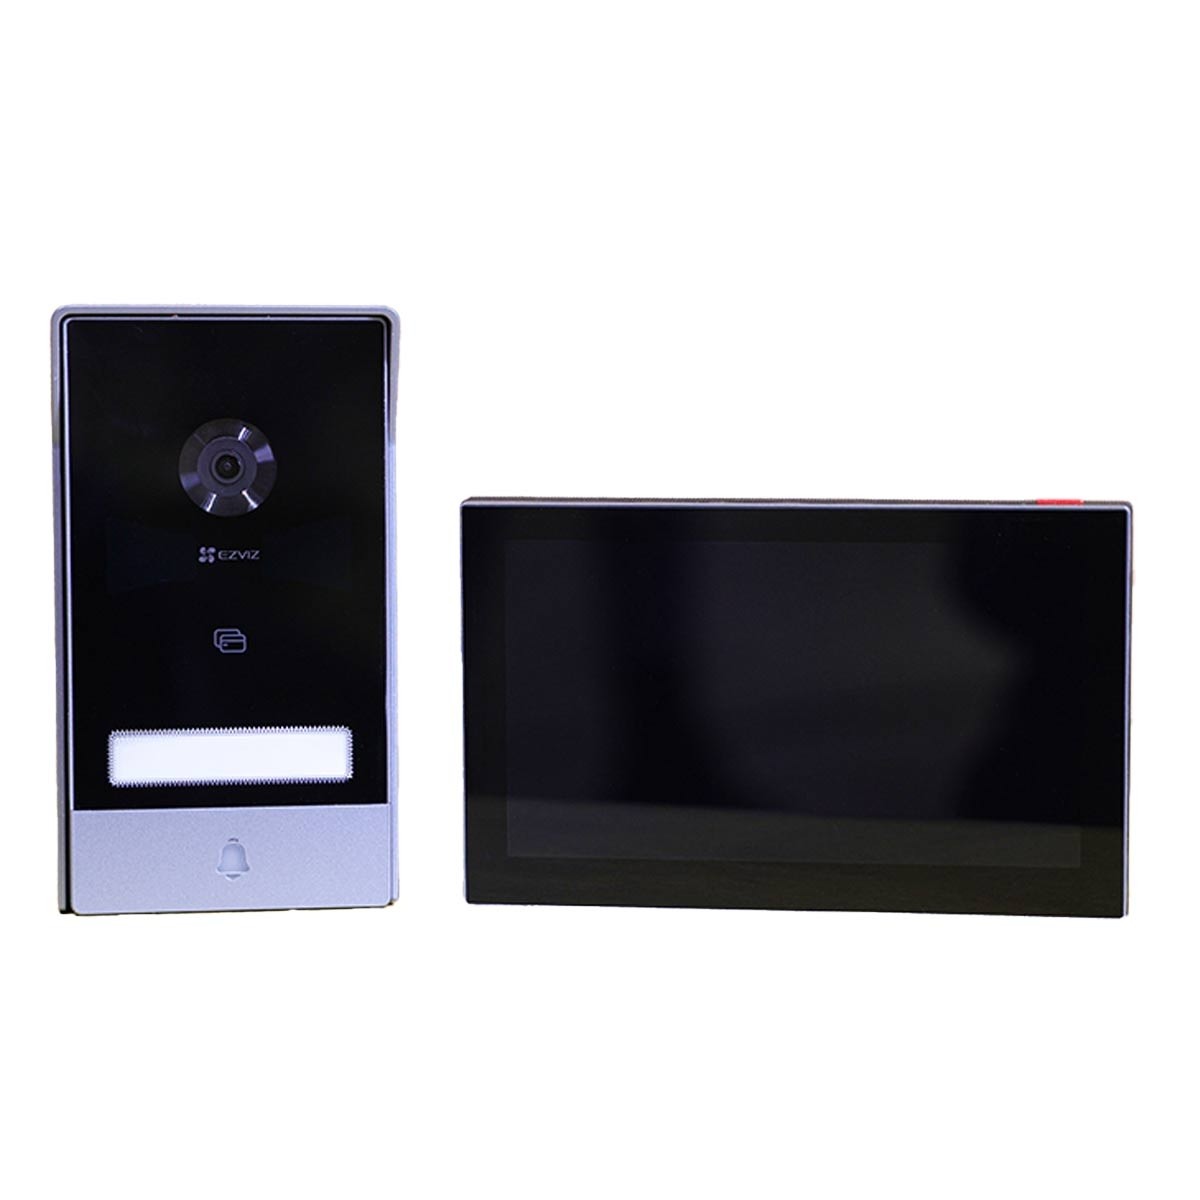 EZVIZ HP7 2K Smart Home Video Doorphone Intercome